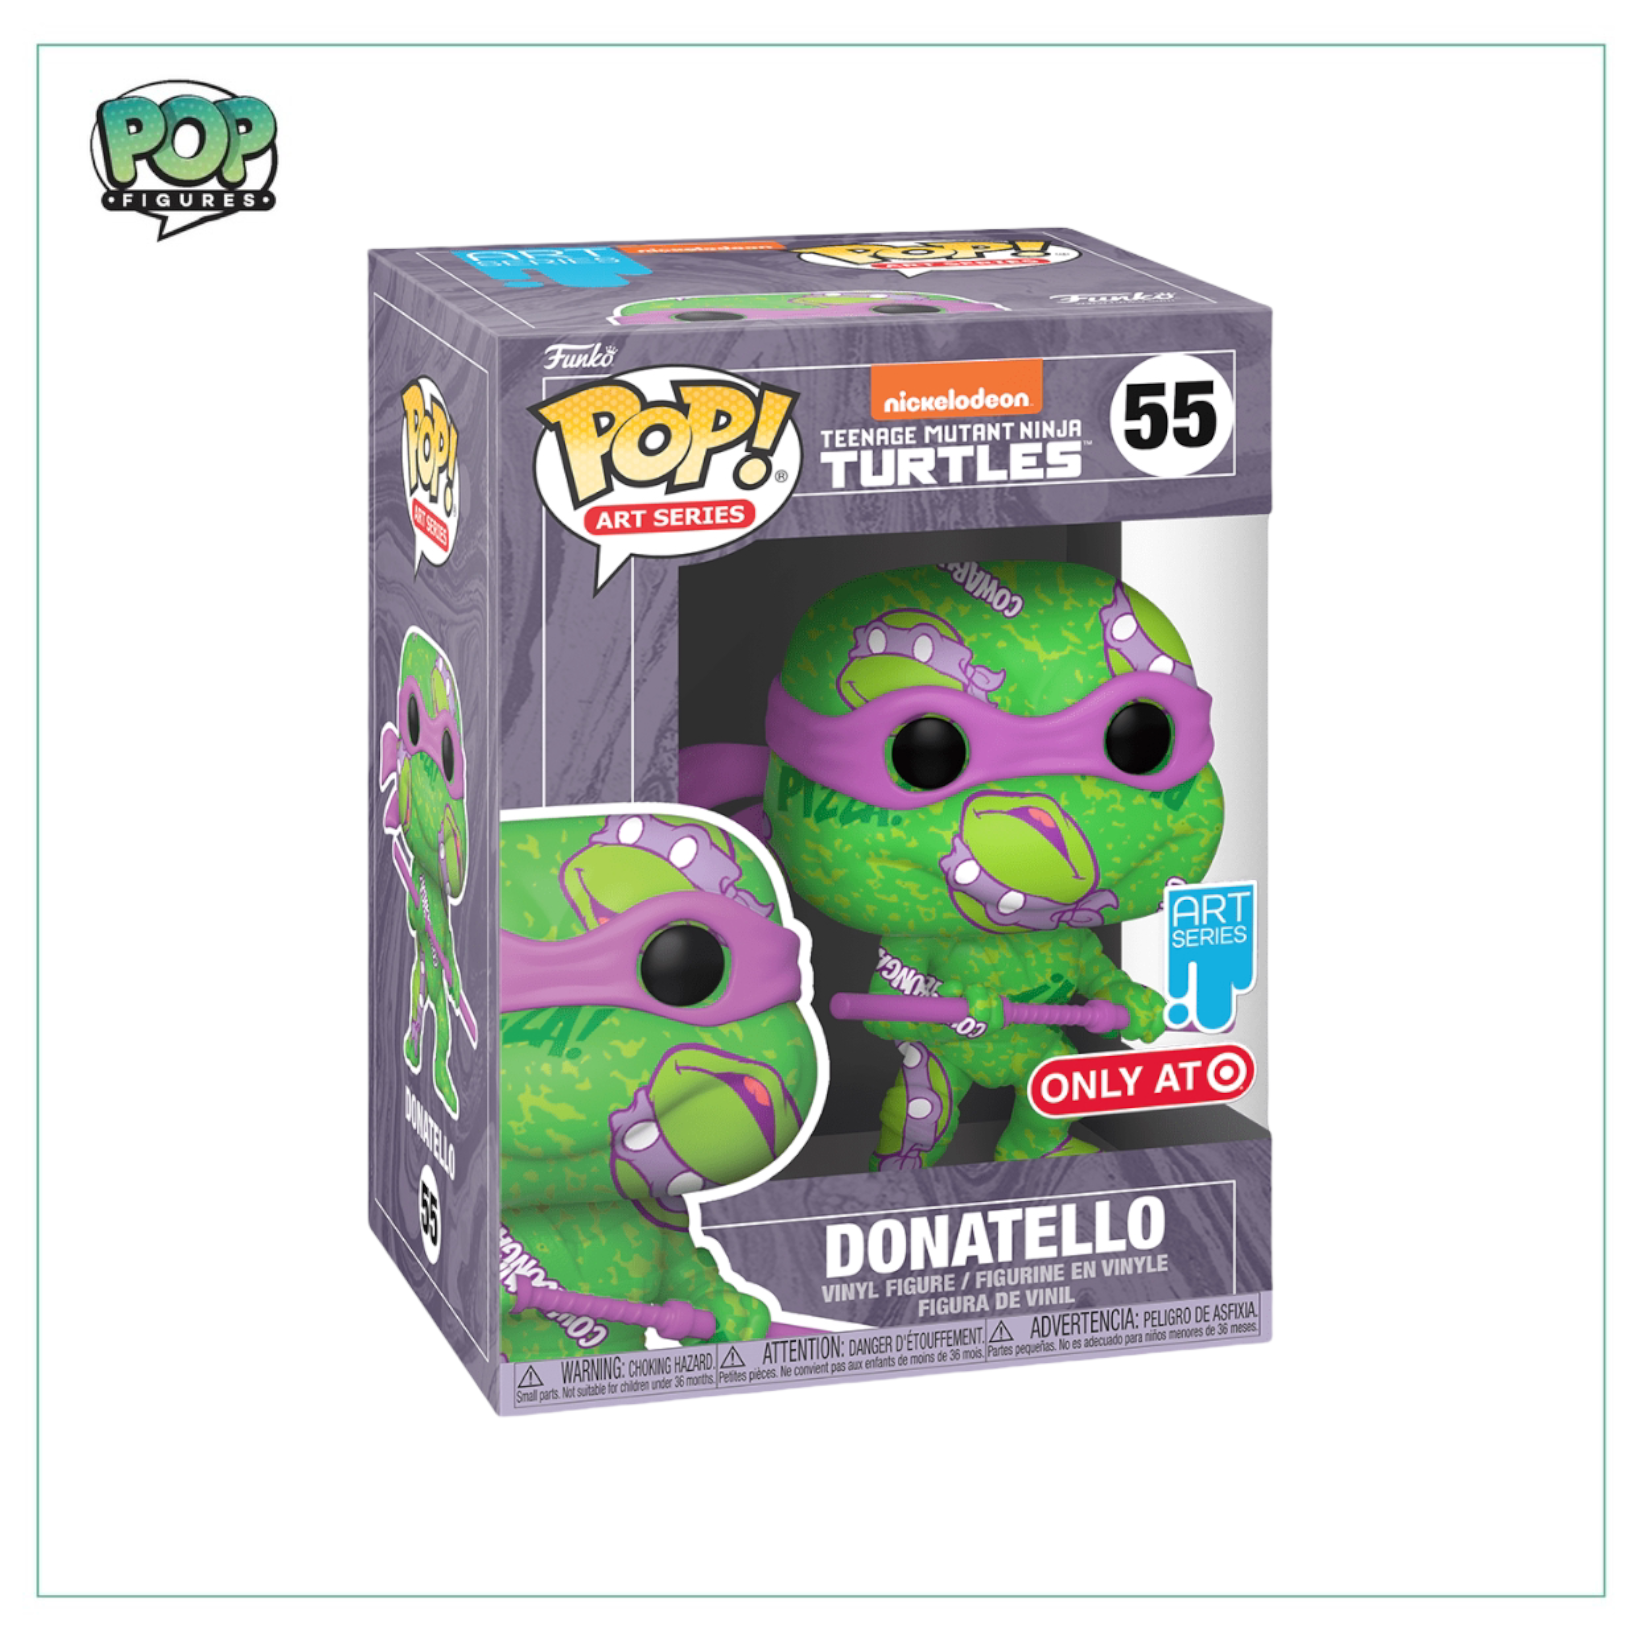 Donatello #55 (Artist Series) Funko Pop! Teenage Mutant Ninja Turtles, Target Exclusive